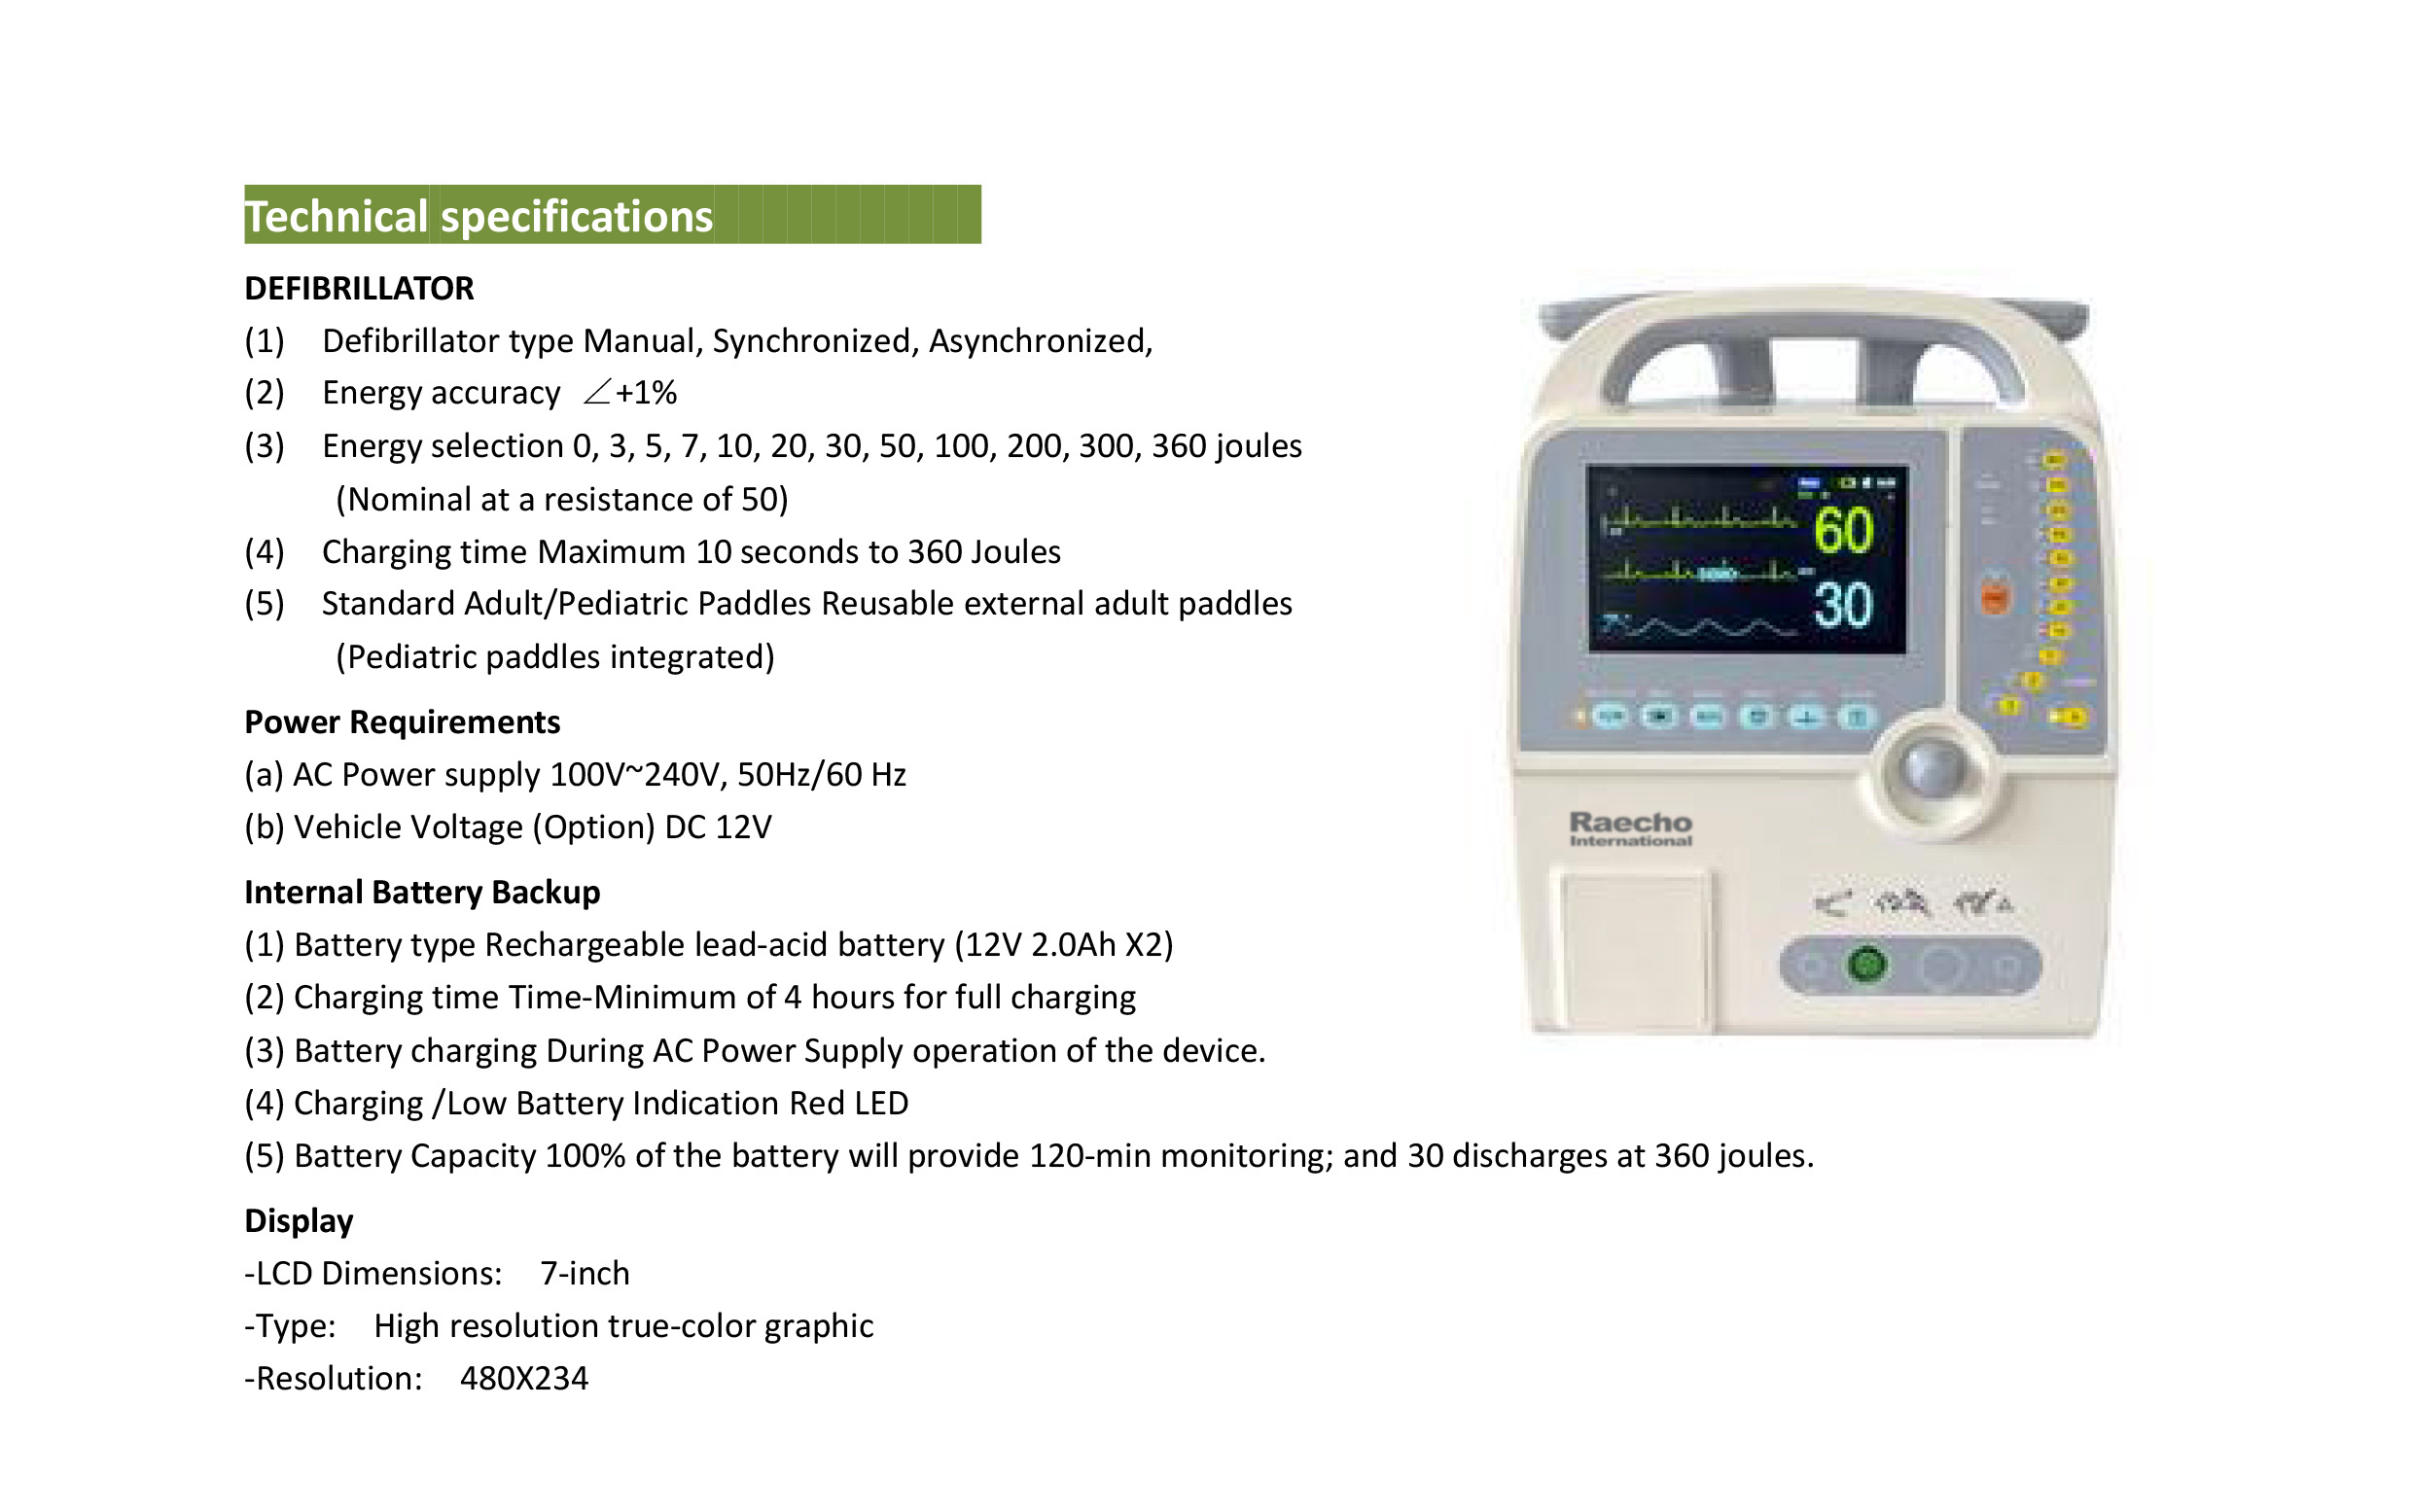 Raecho-Defibrillator-RD-8000D-1 2.jpg